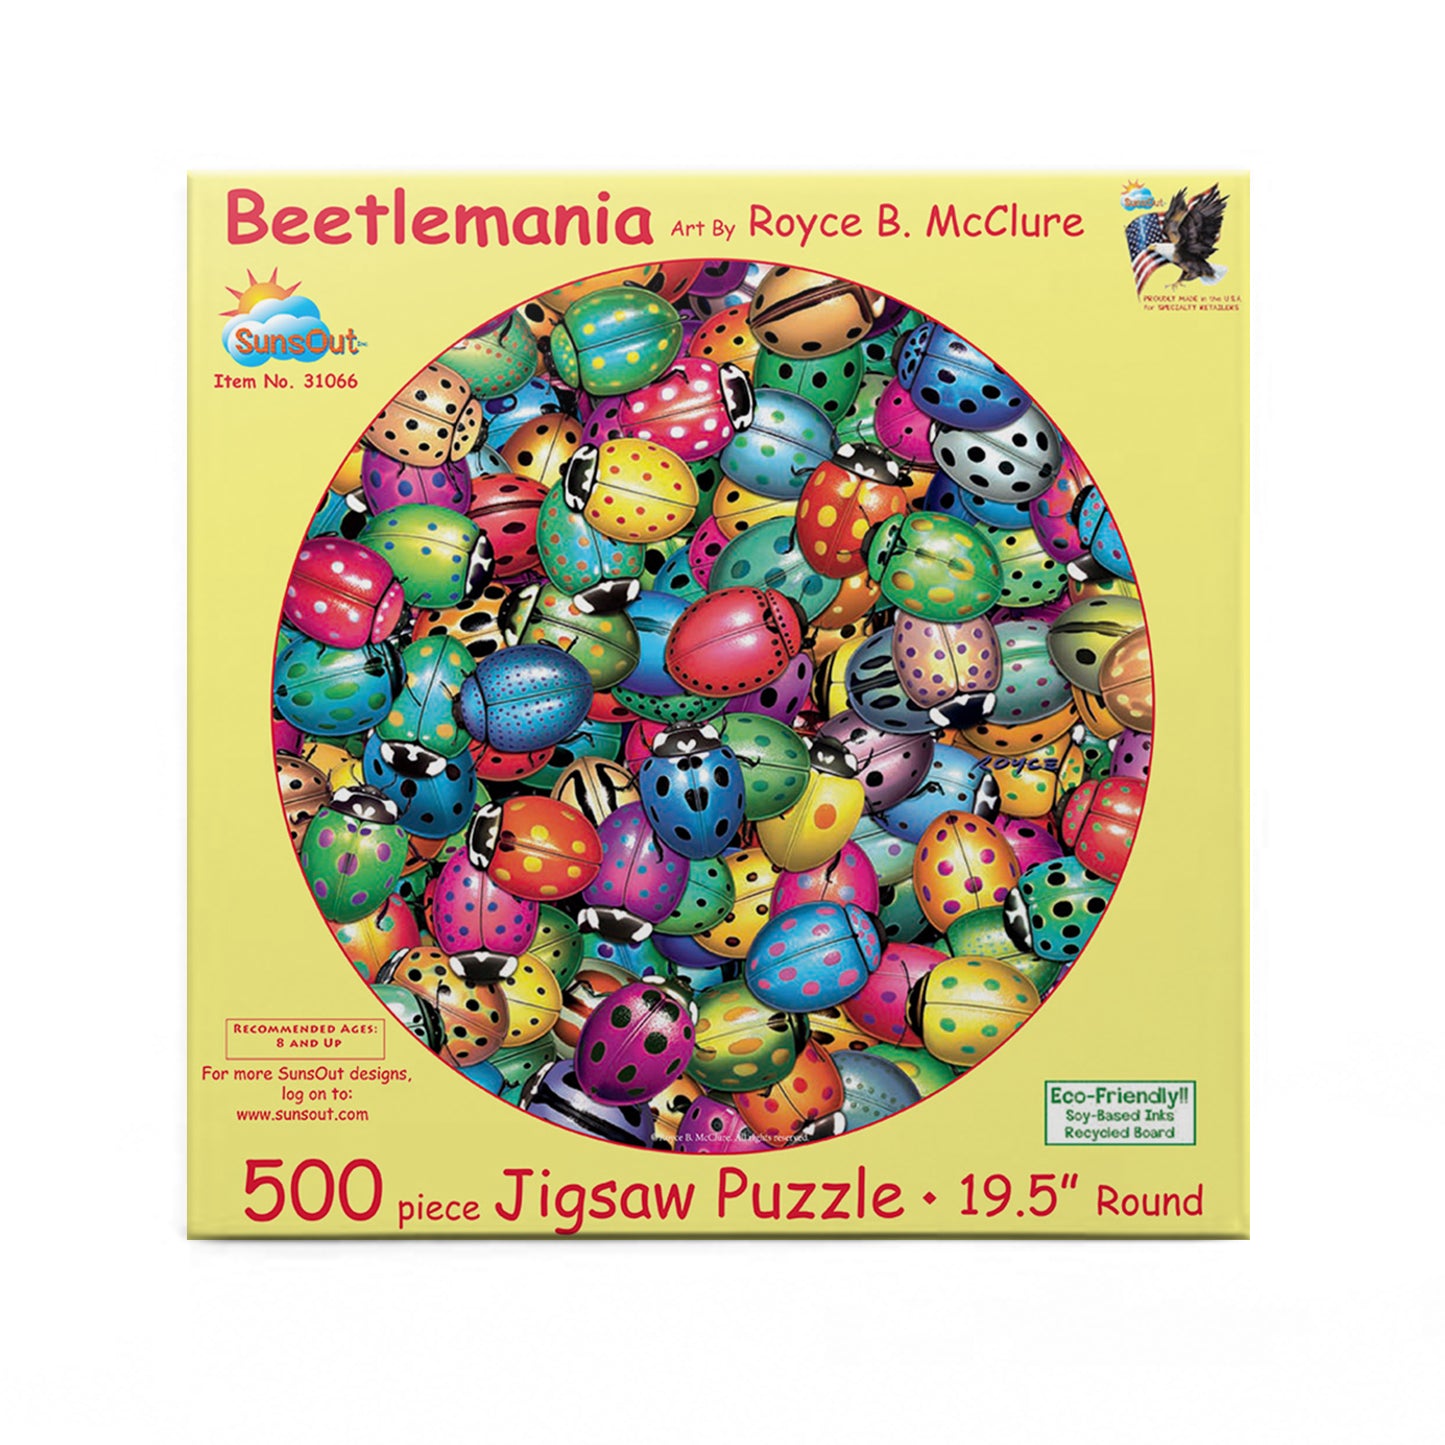 Beetlemania - 500 Piece Jigsaw Puzzle